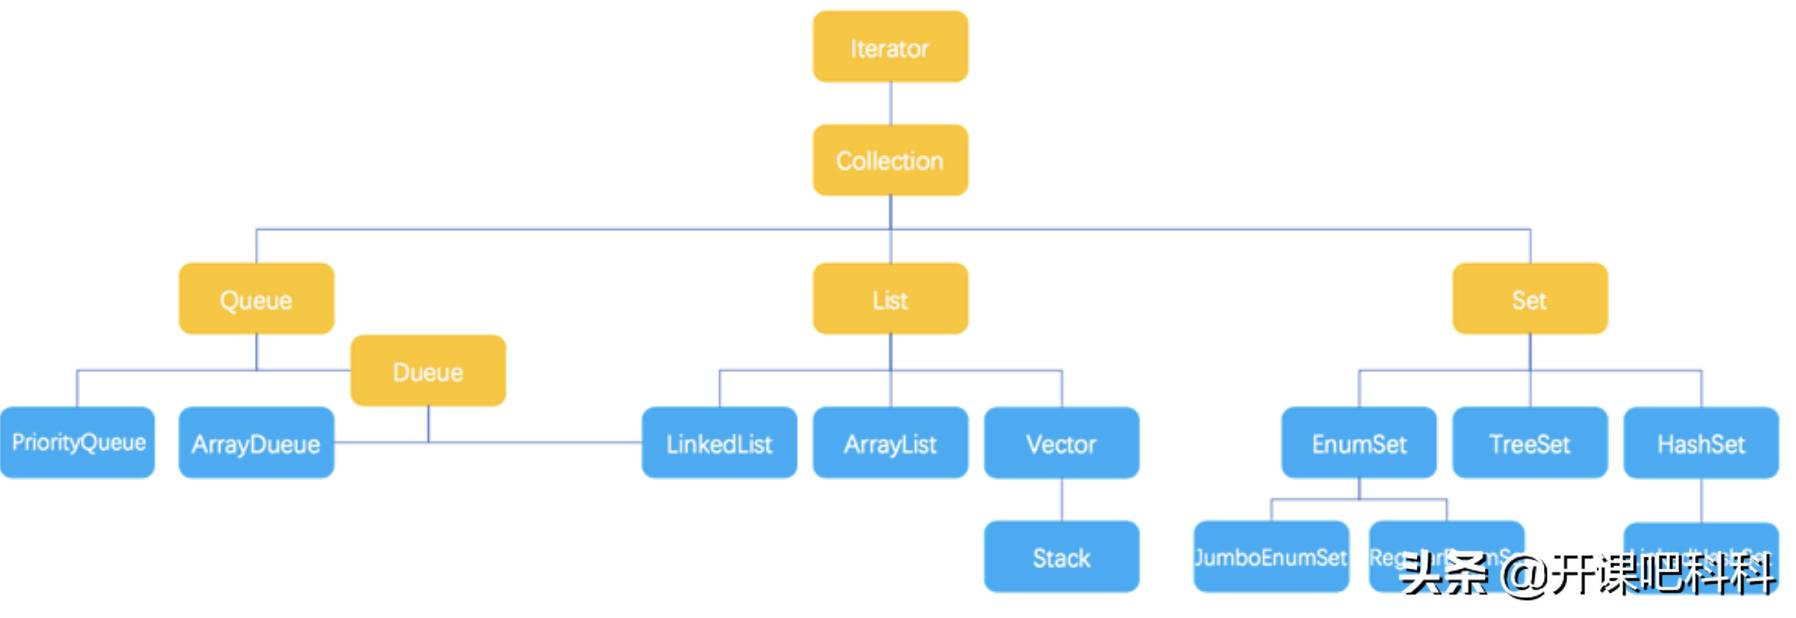 java集合类型-java集合类详解和使用-第1张图片